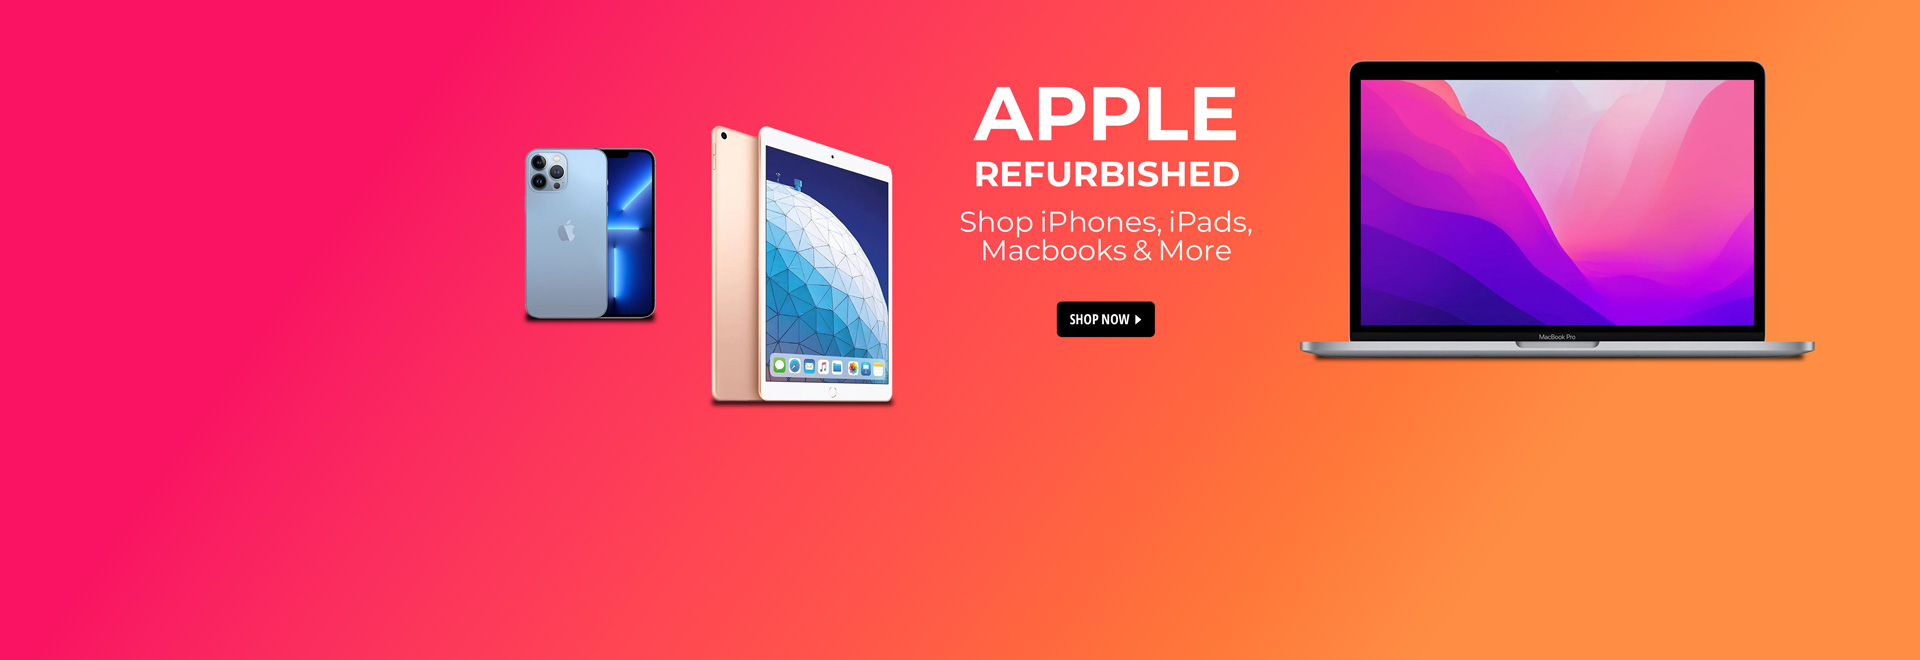 newegg.com - Apple refurbished electronics